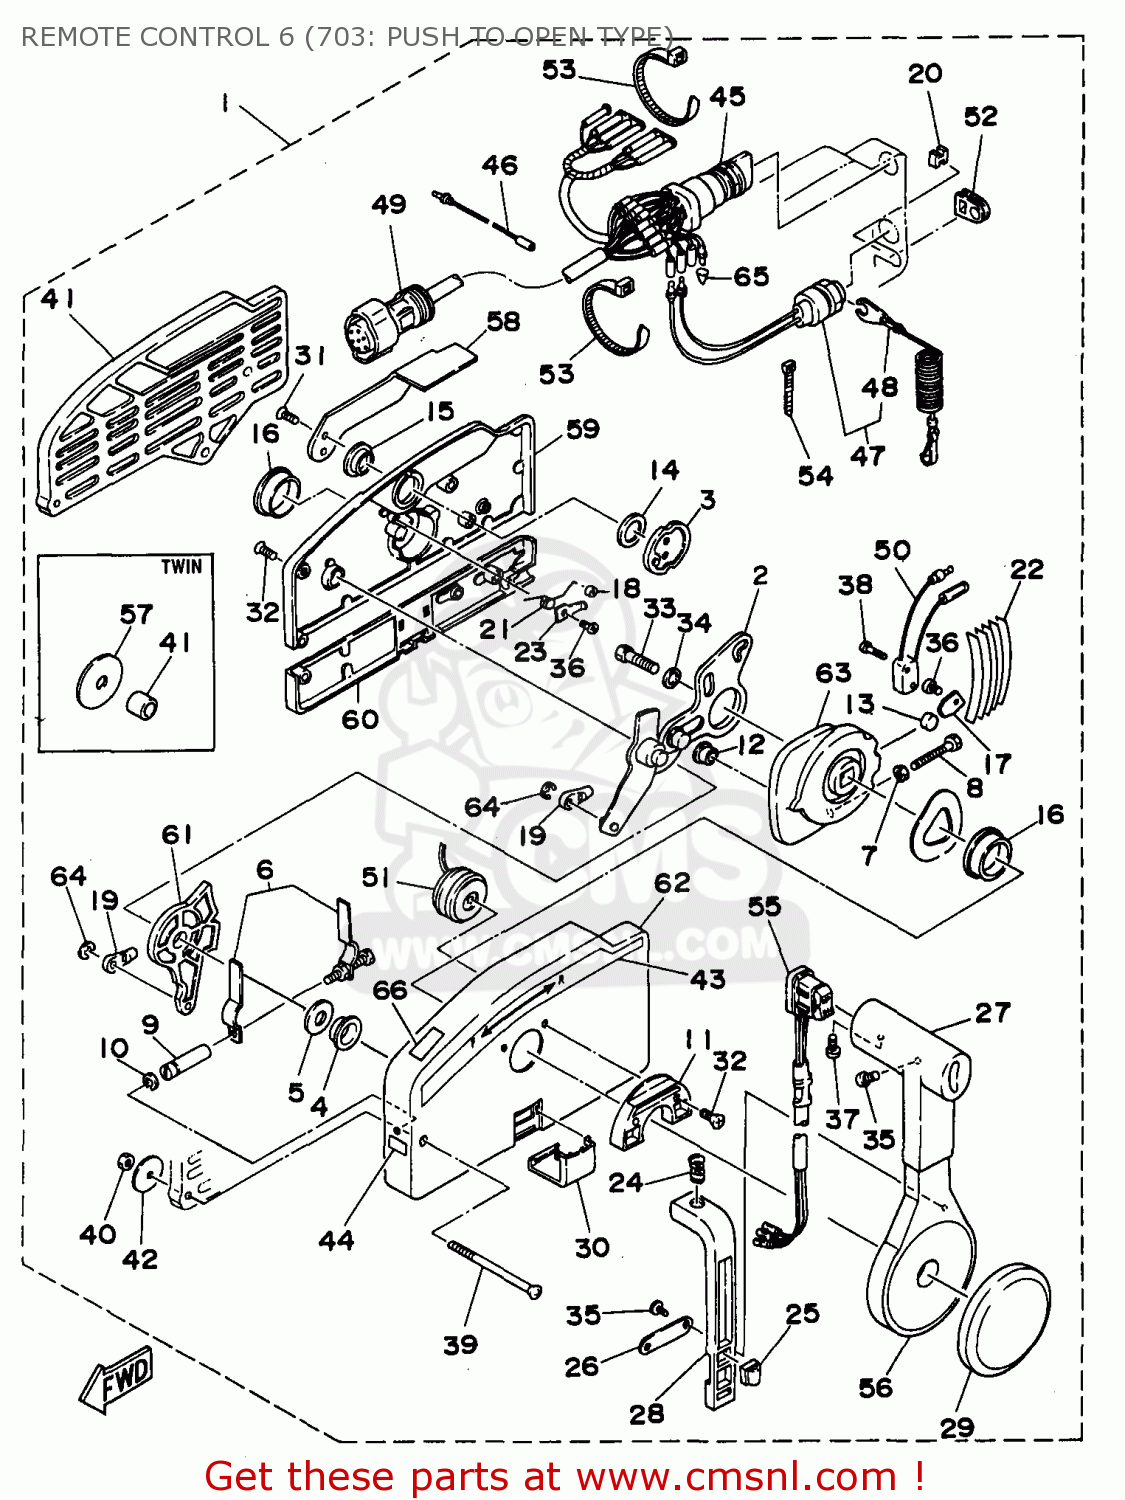 1994 Ford 3930 Wiring Diagram